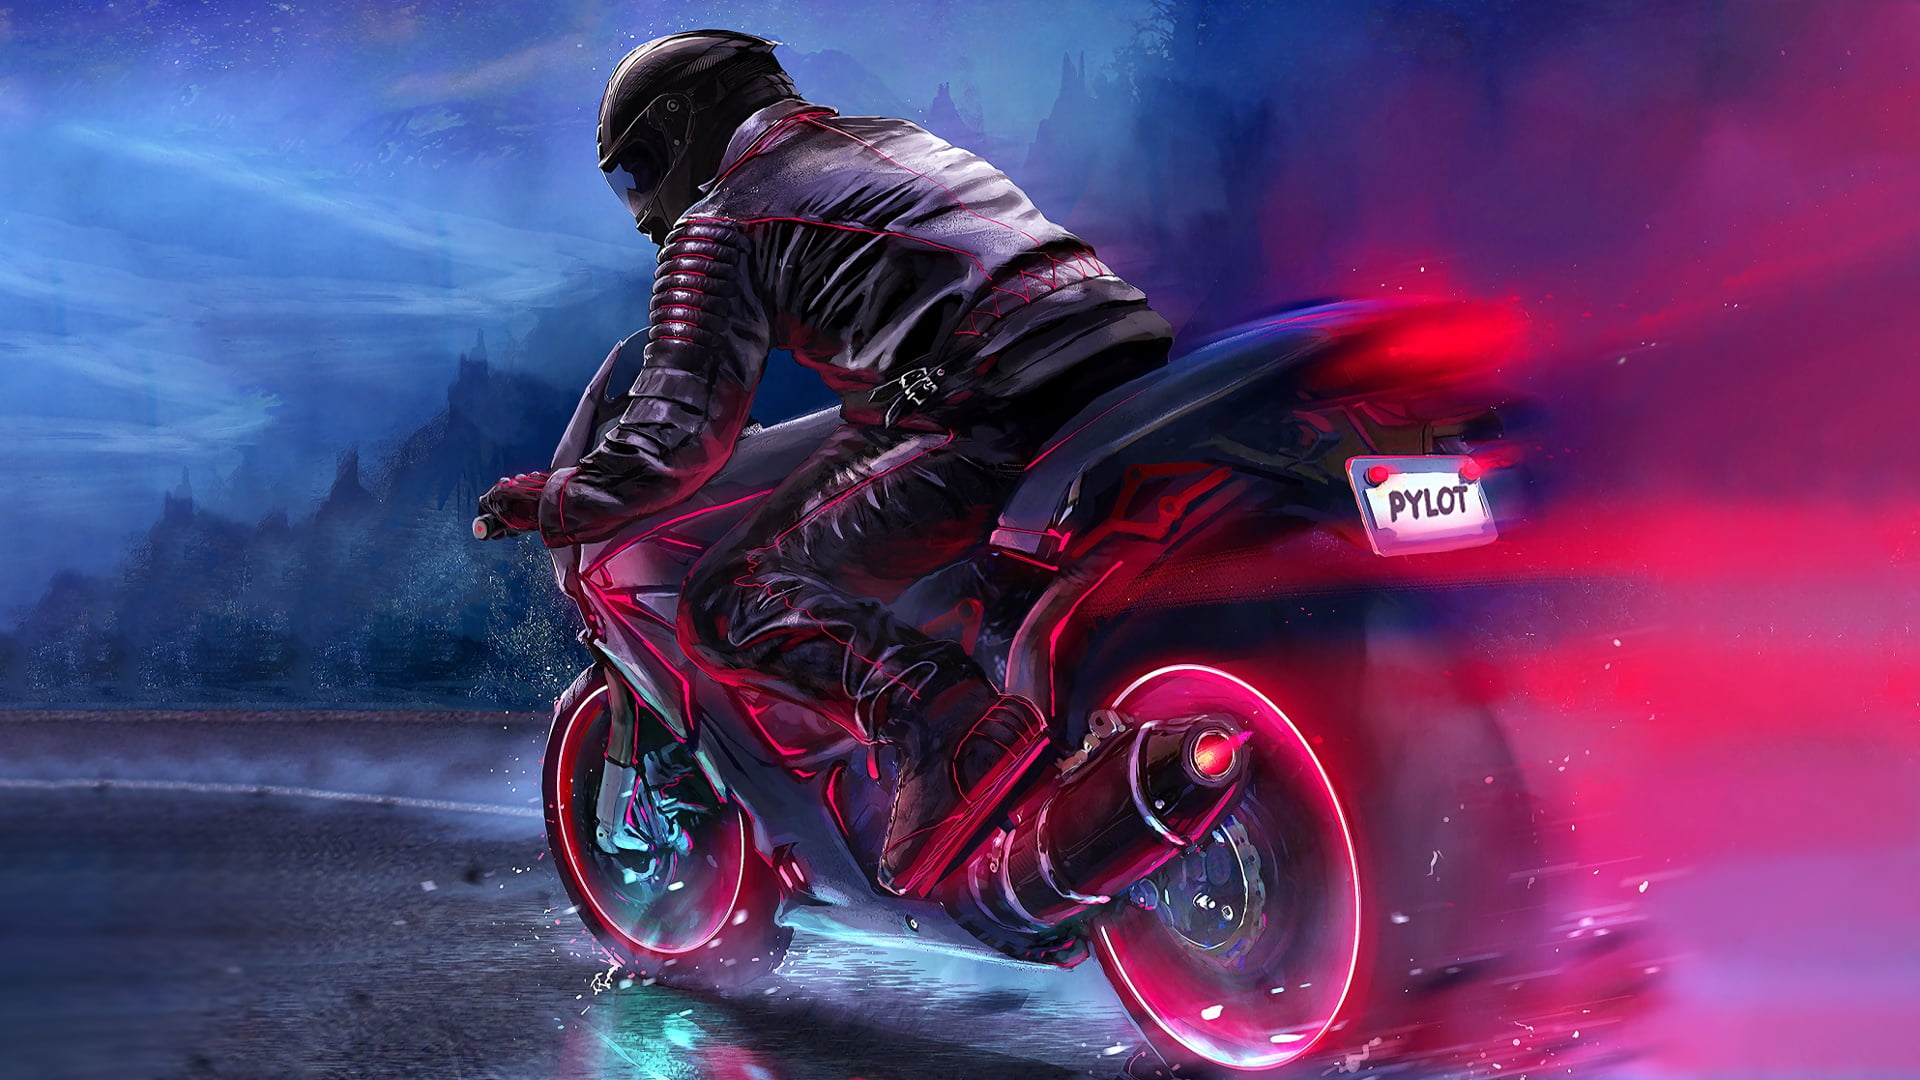 Wallpaper black and red sports bike, digital art, motorcycle, pilot, fantasy art